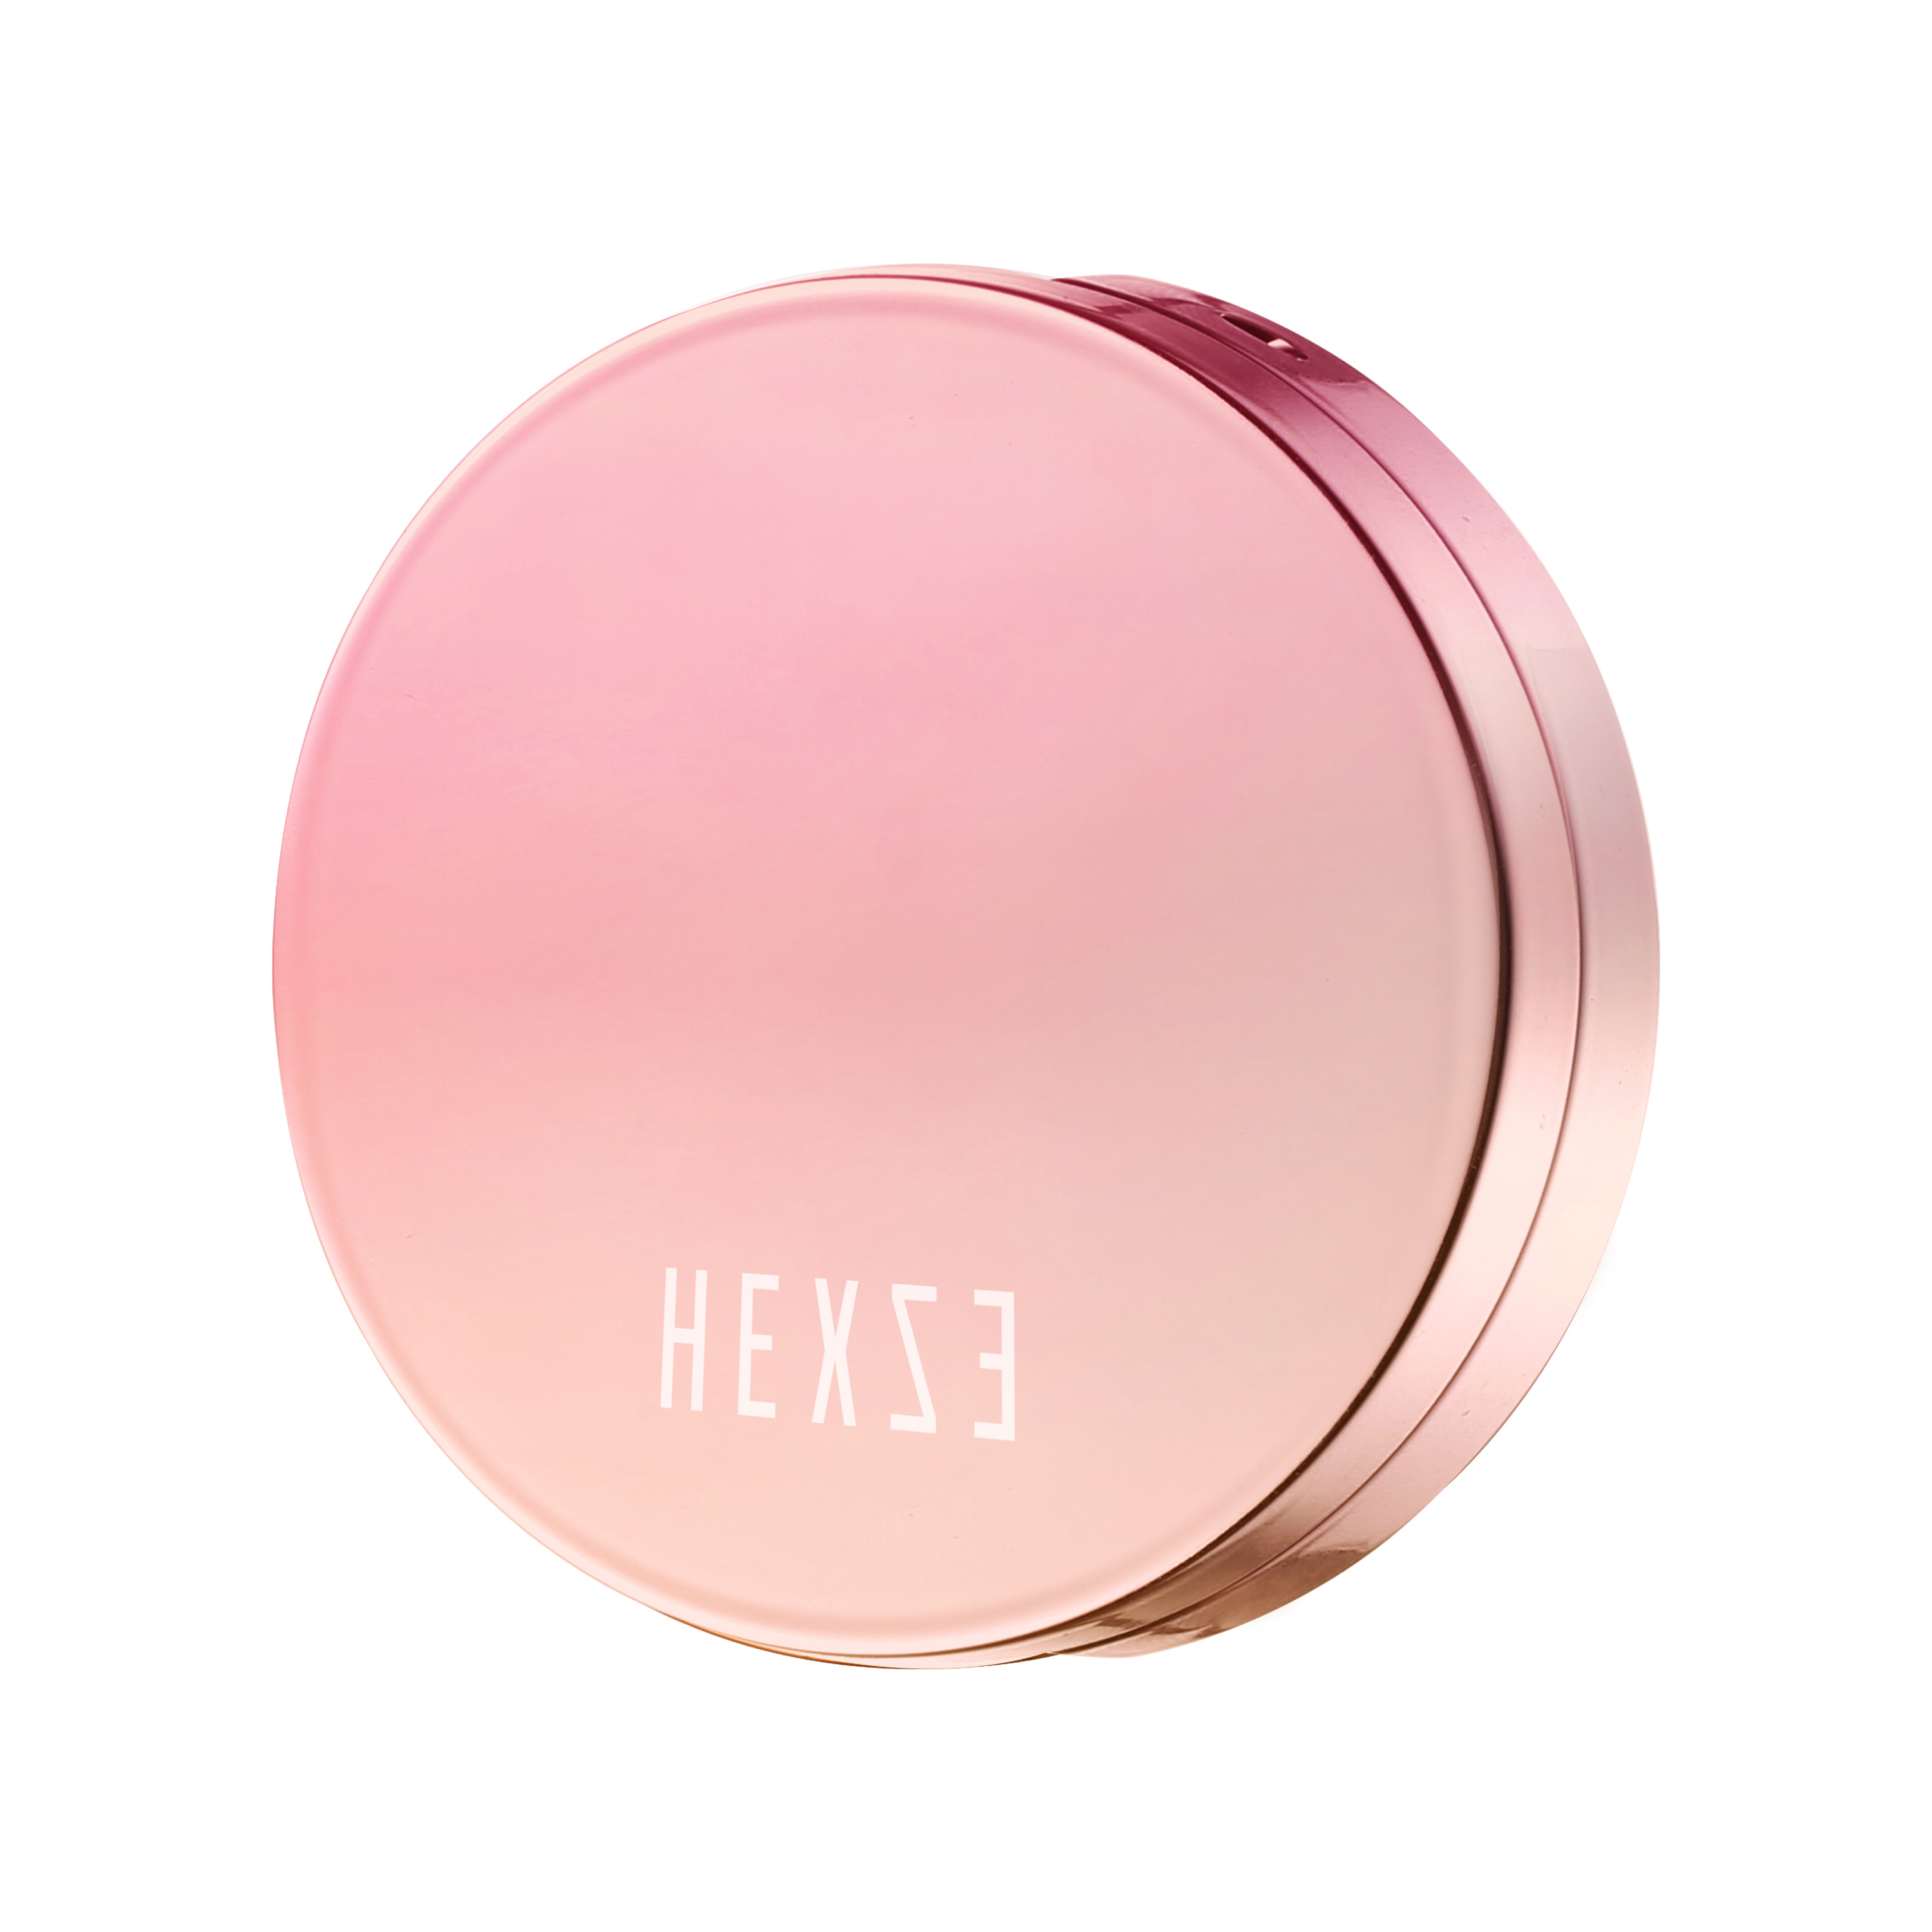 HEXZE Highlighter Powder Translucent Makeup Shimmer Baking Powder Skin Brighten Highlight Face Contour Bronzer Cosmetics